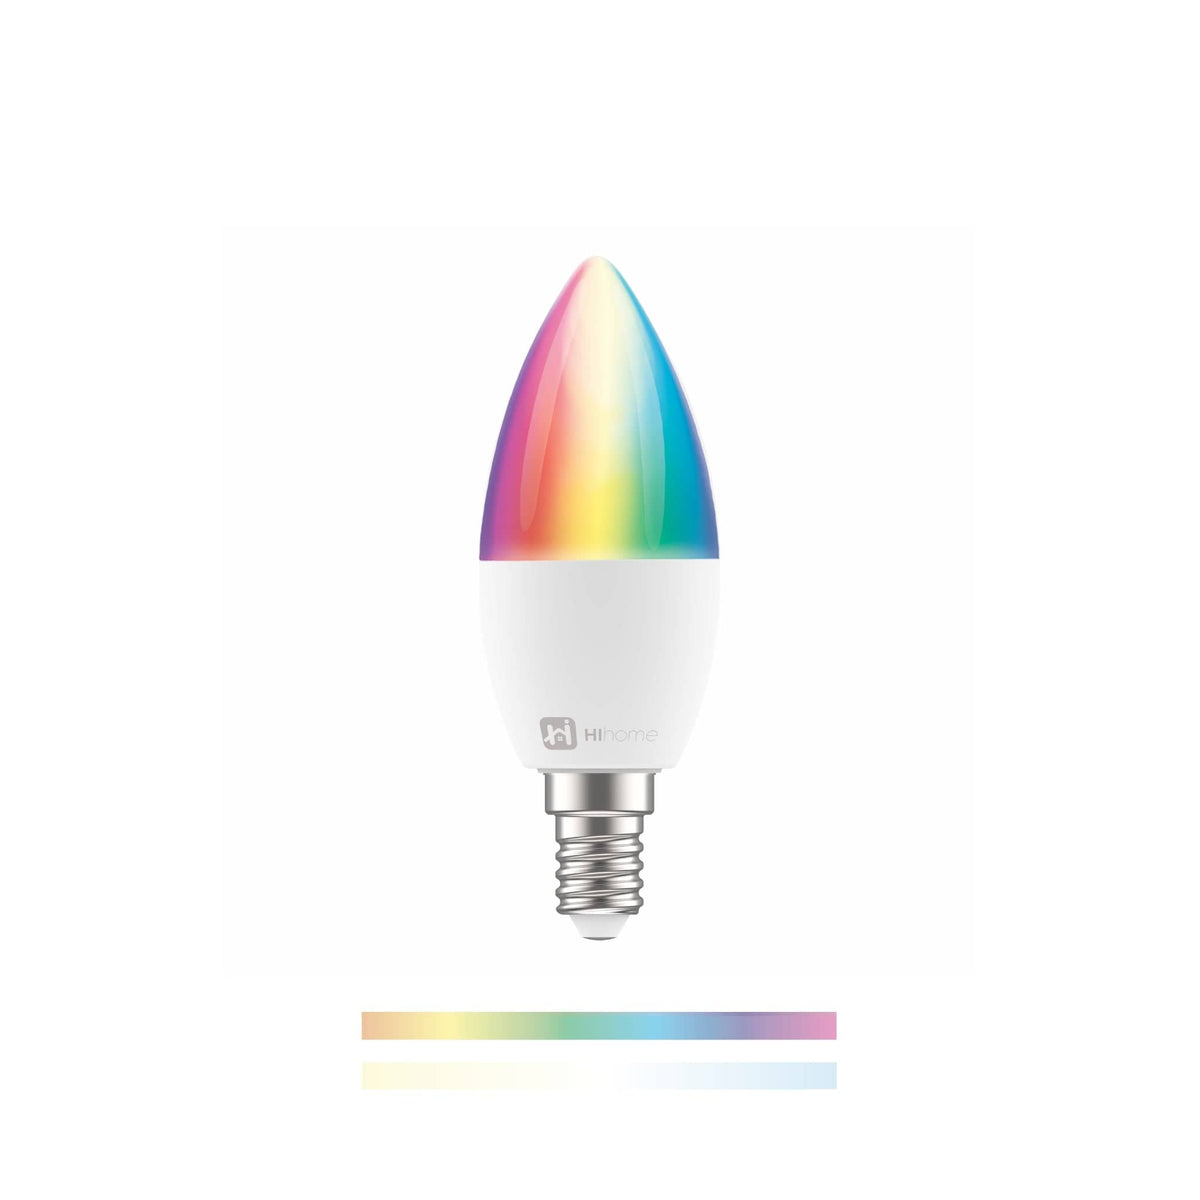 Hihome Smart LED WiFi Bulb E14 Gen.2 RGB 16M Colors + Warm White 2700K to Cool White 6500K